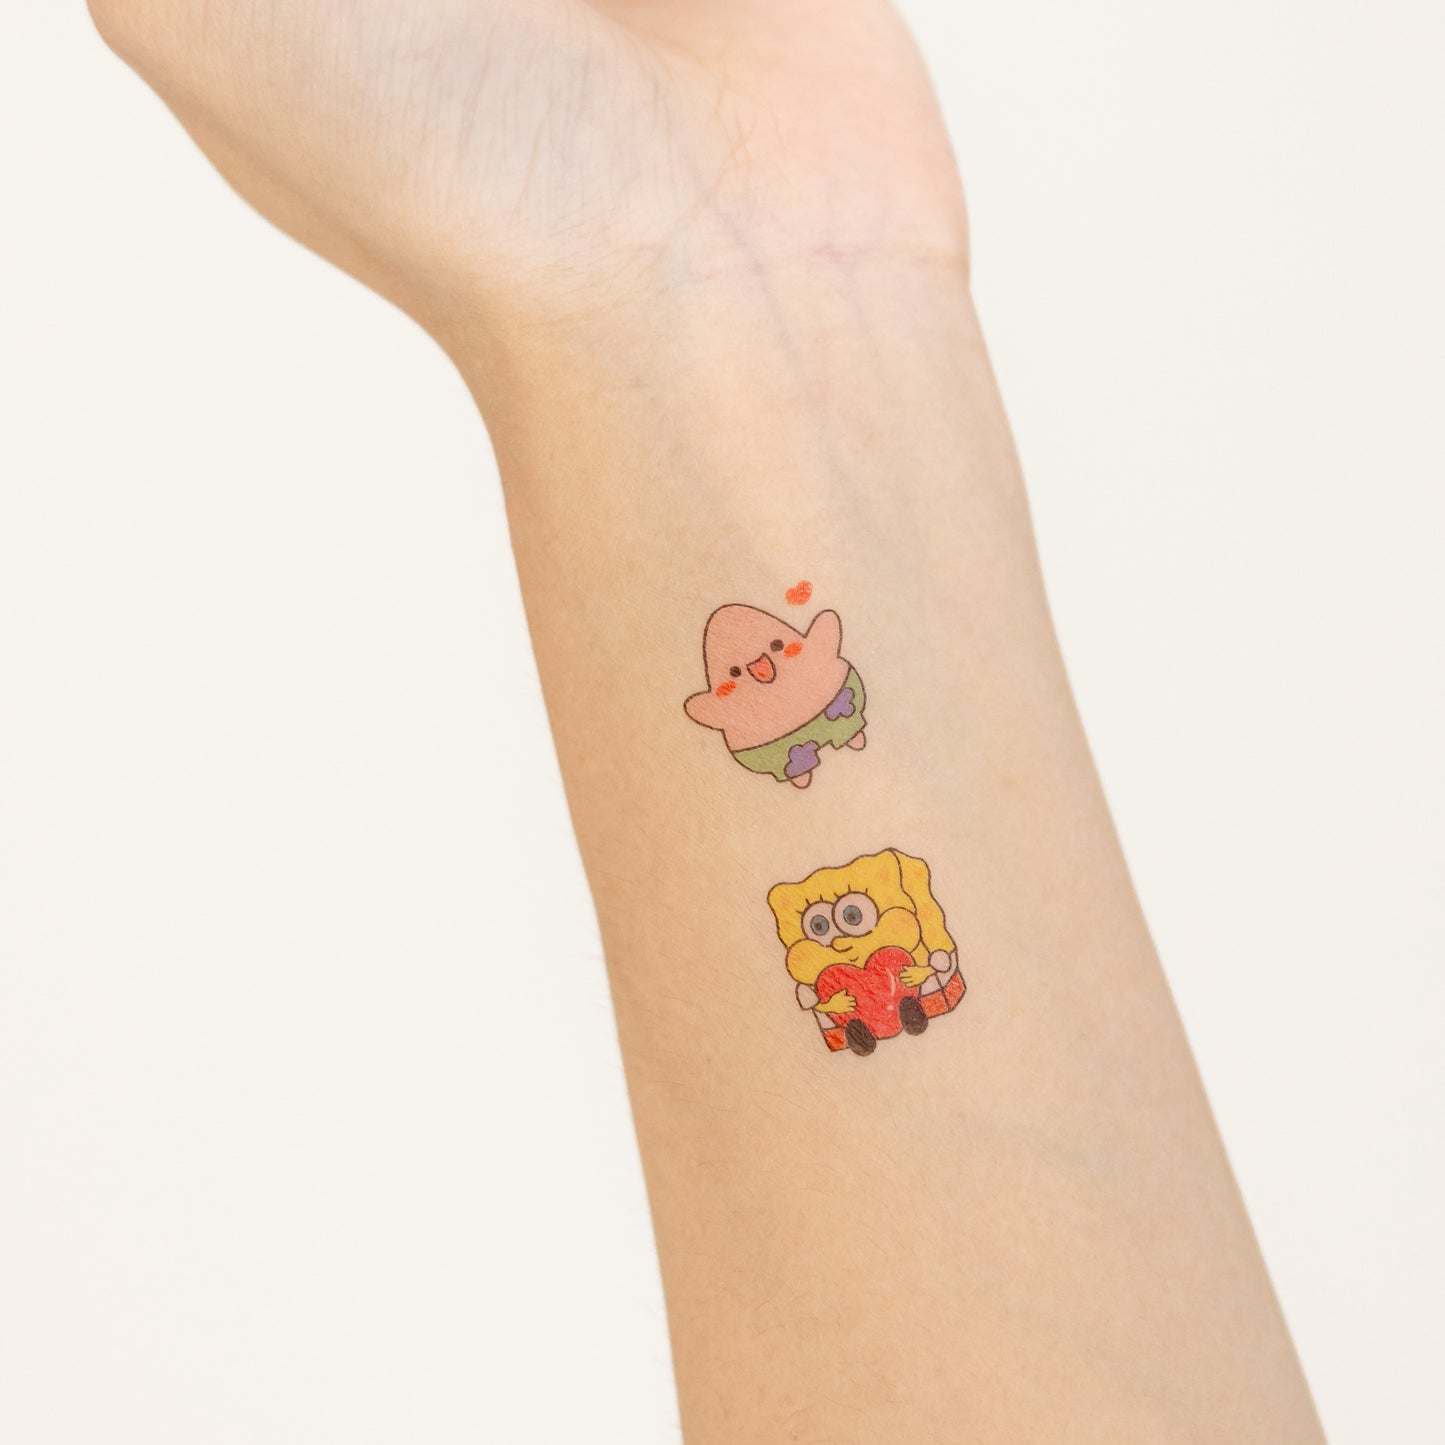 spongebob squarepants & patrick star - temporary tattoo sticker